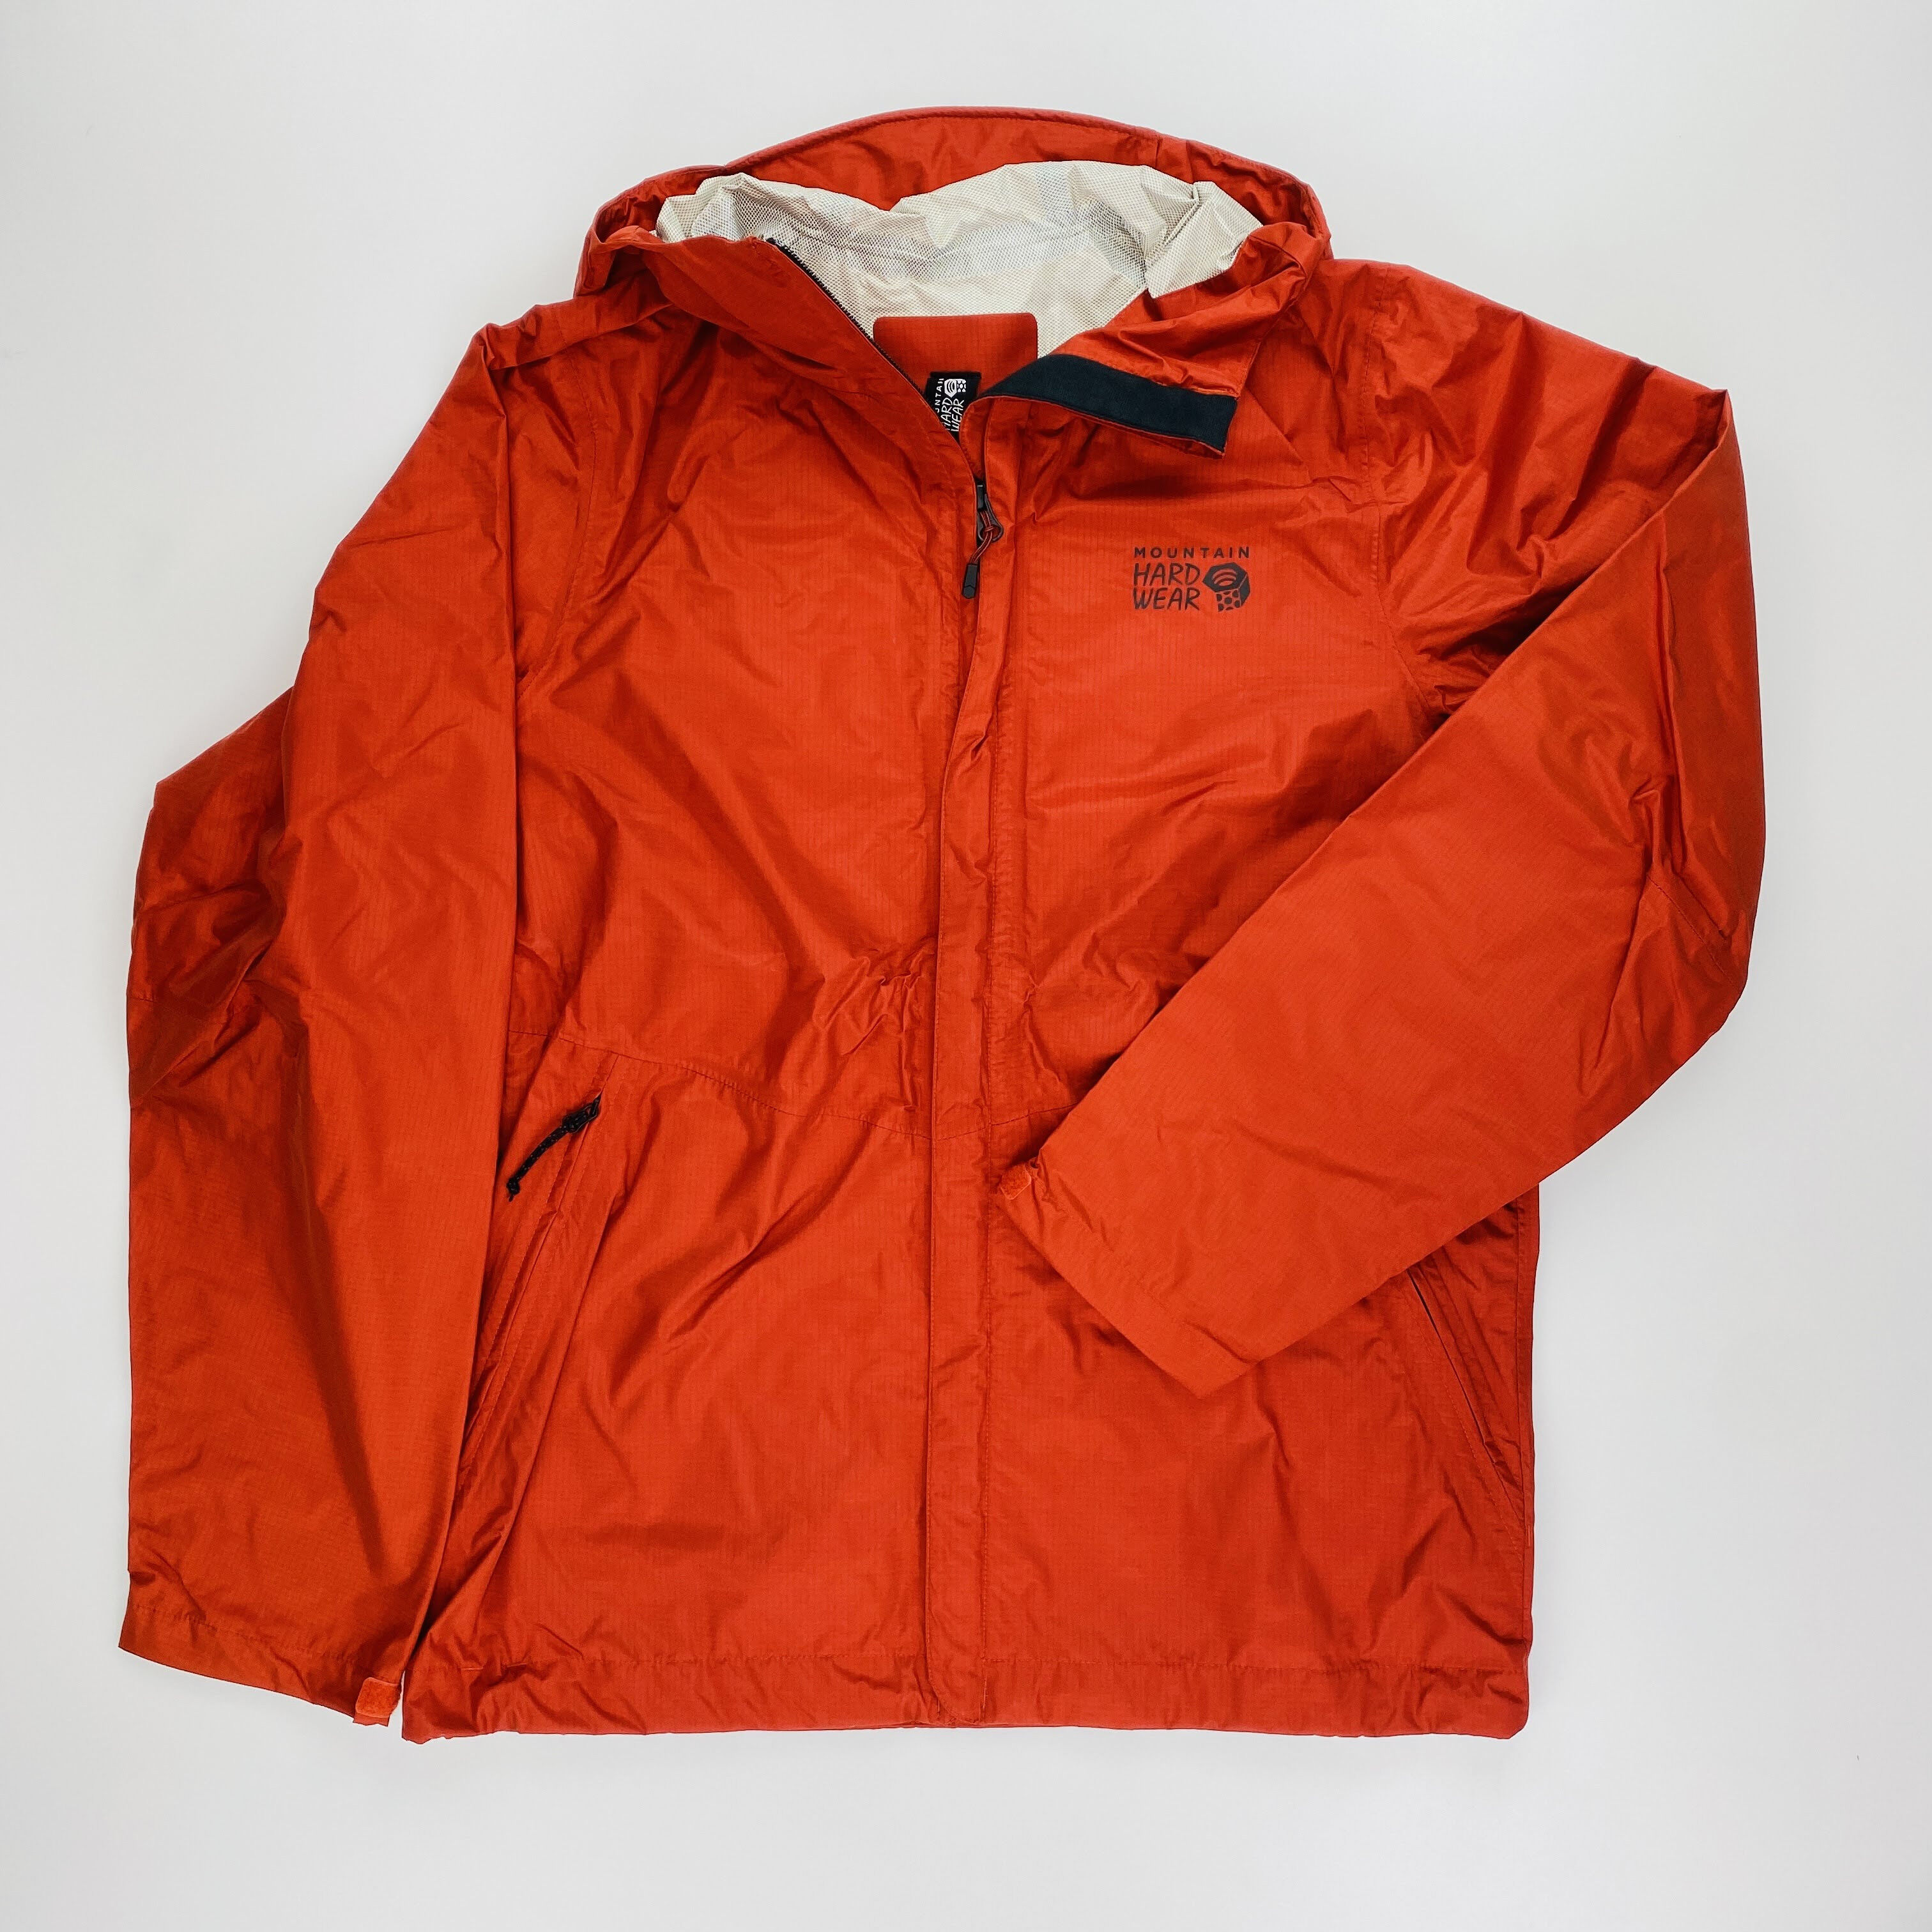 Mountain Hardwear Acadia Man Jacket - Giacca antipioggia di seconda mano - Uomo - Rosso - S | Hardloop